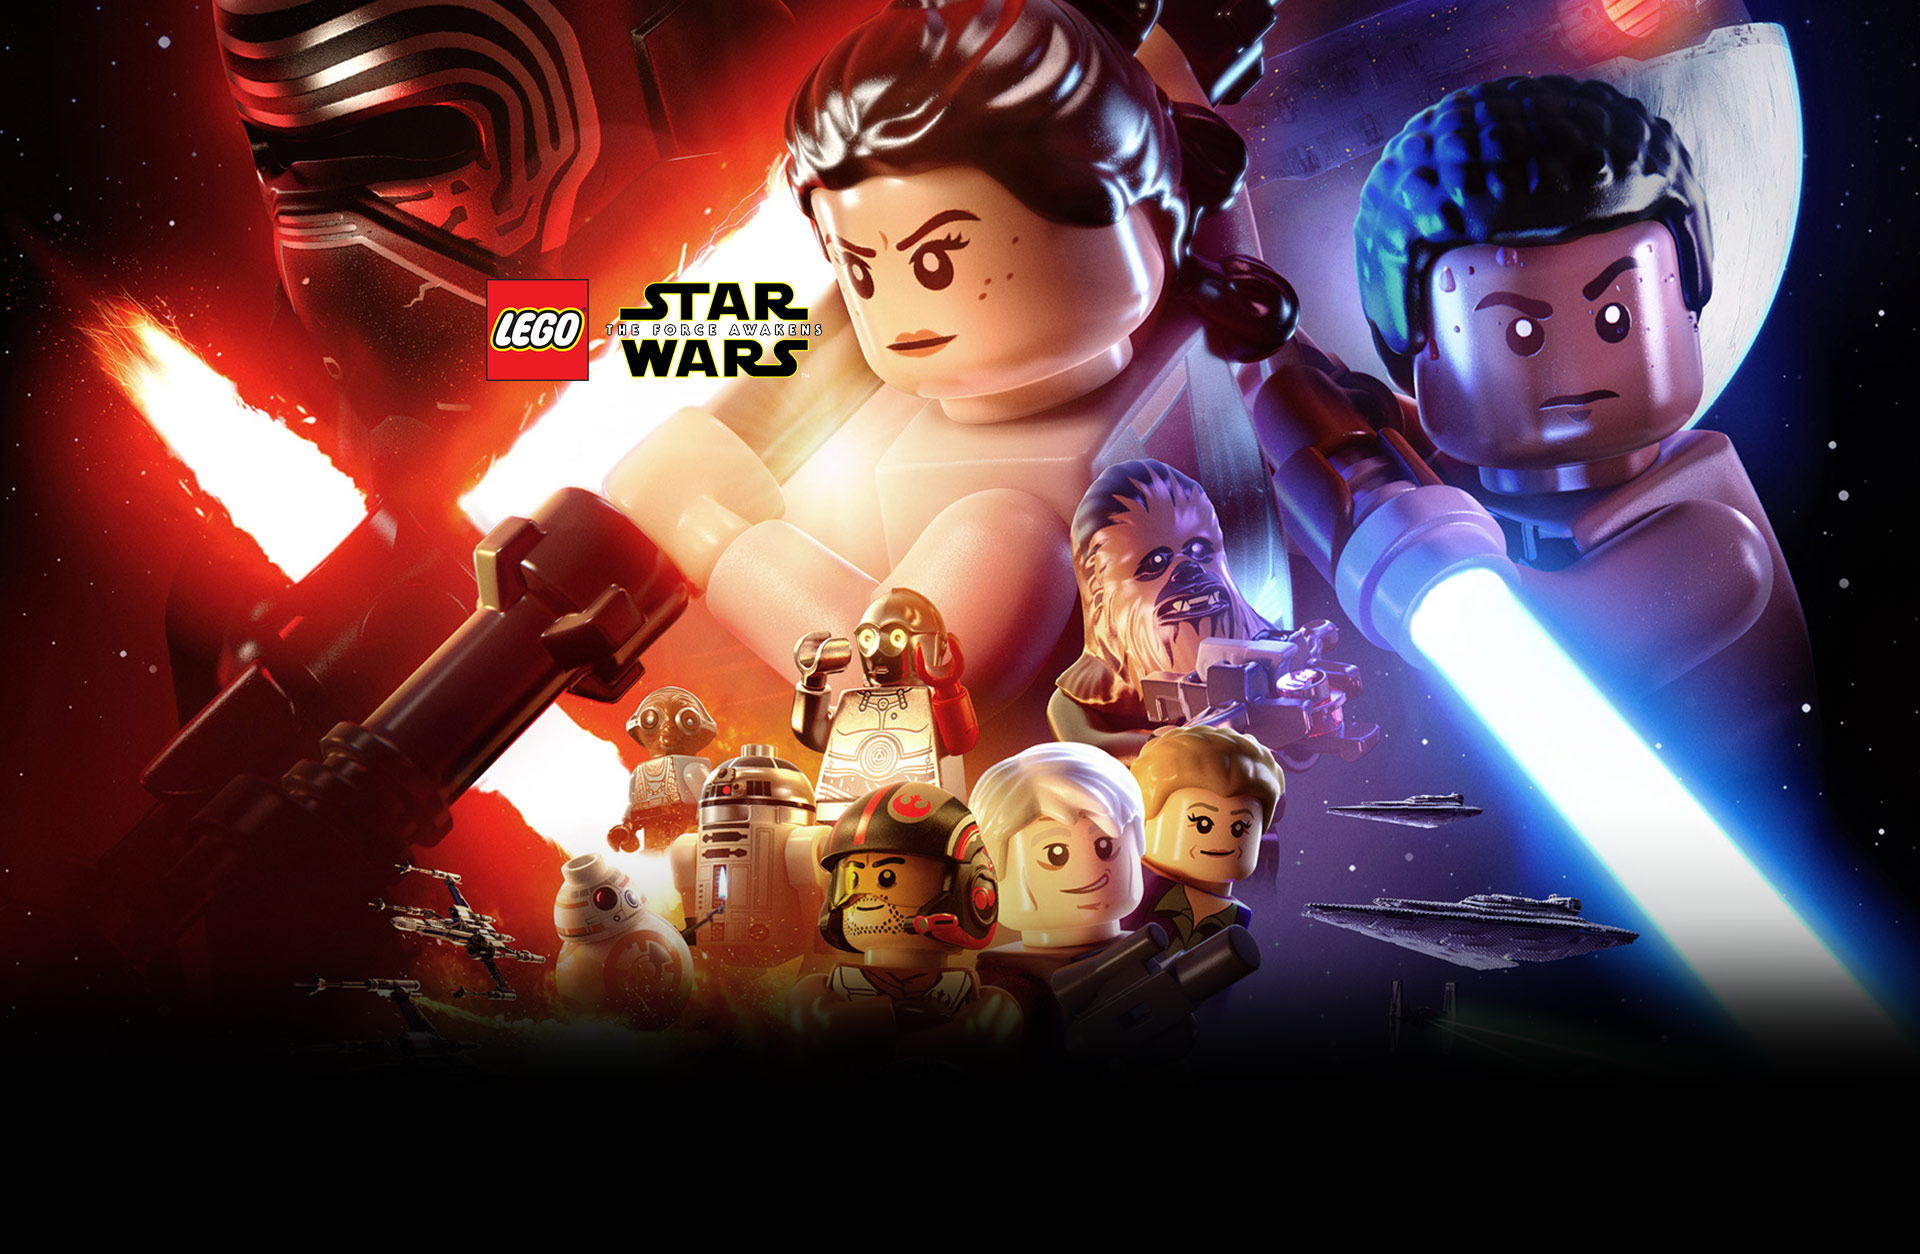 LEGO Star Wars: The Force Awakens - Season Pass